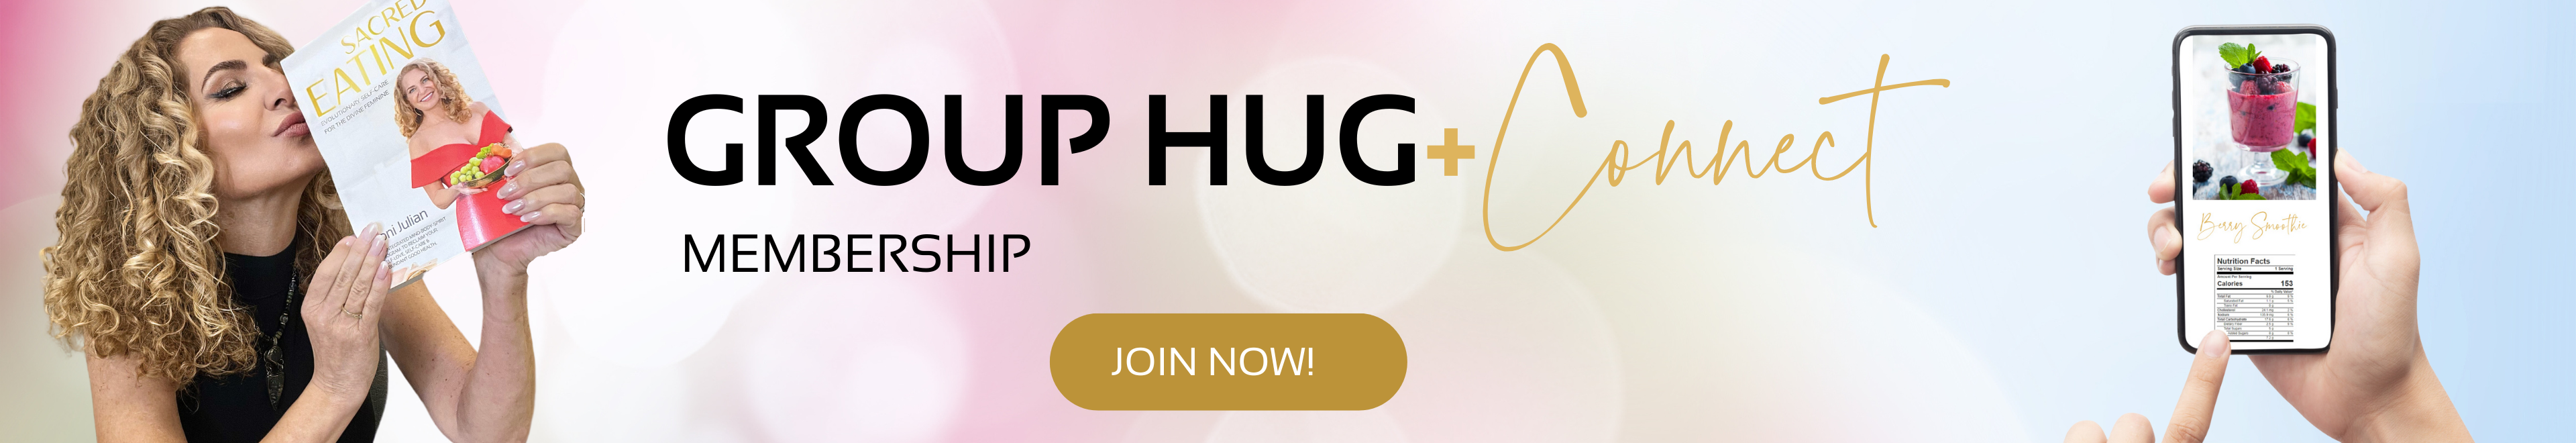 Group Hug Connect Membership Banner